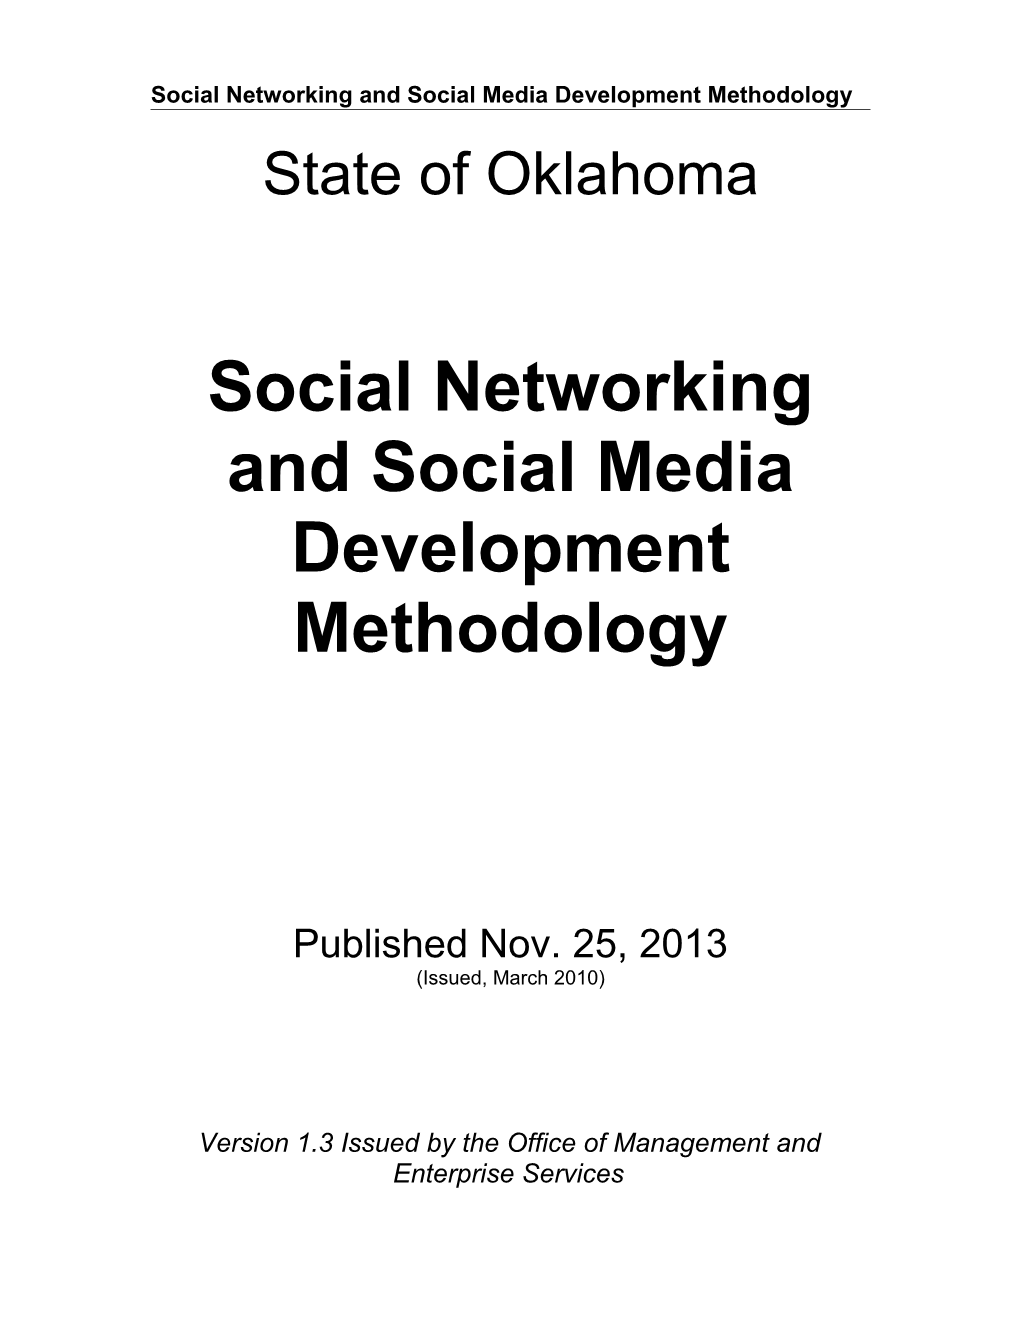 State of Oklahoma Social Networking and Social Media Development Methodology